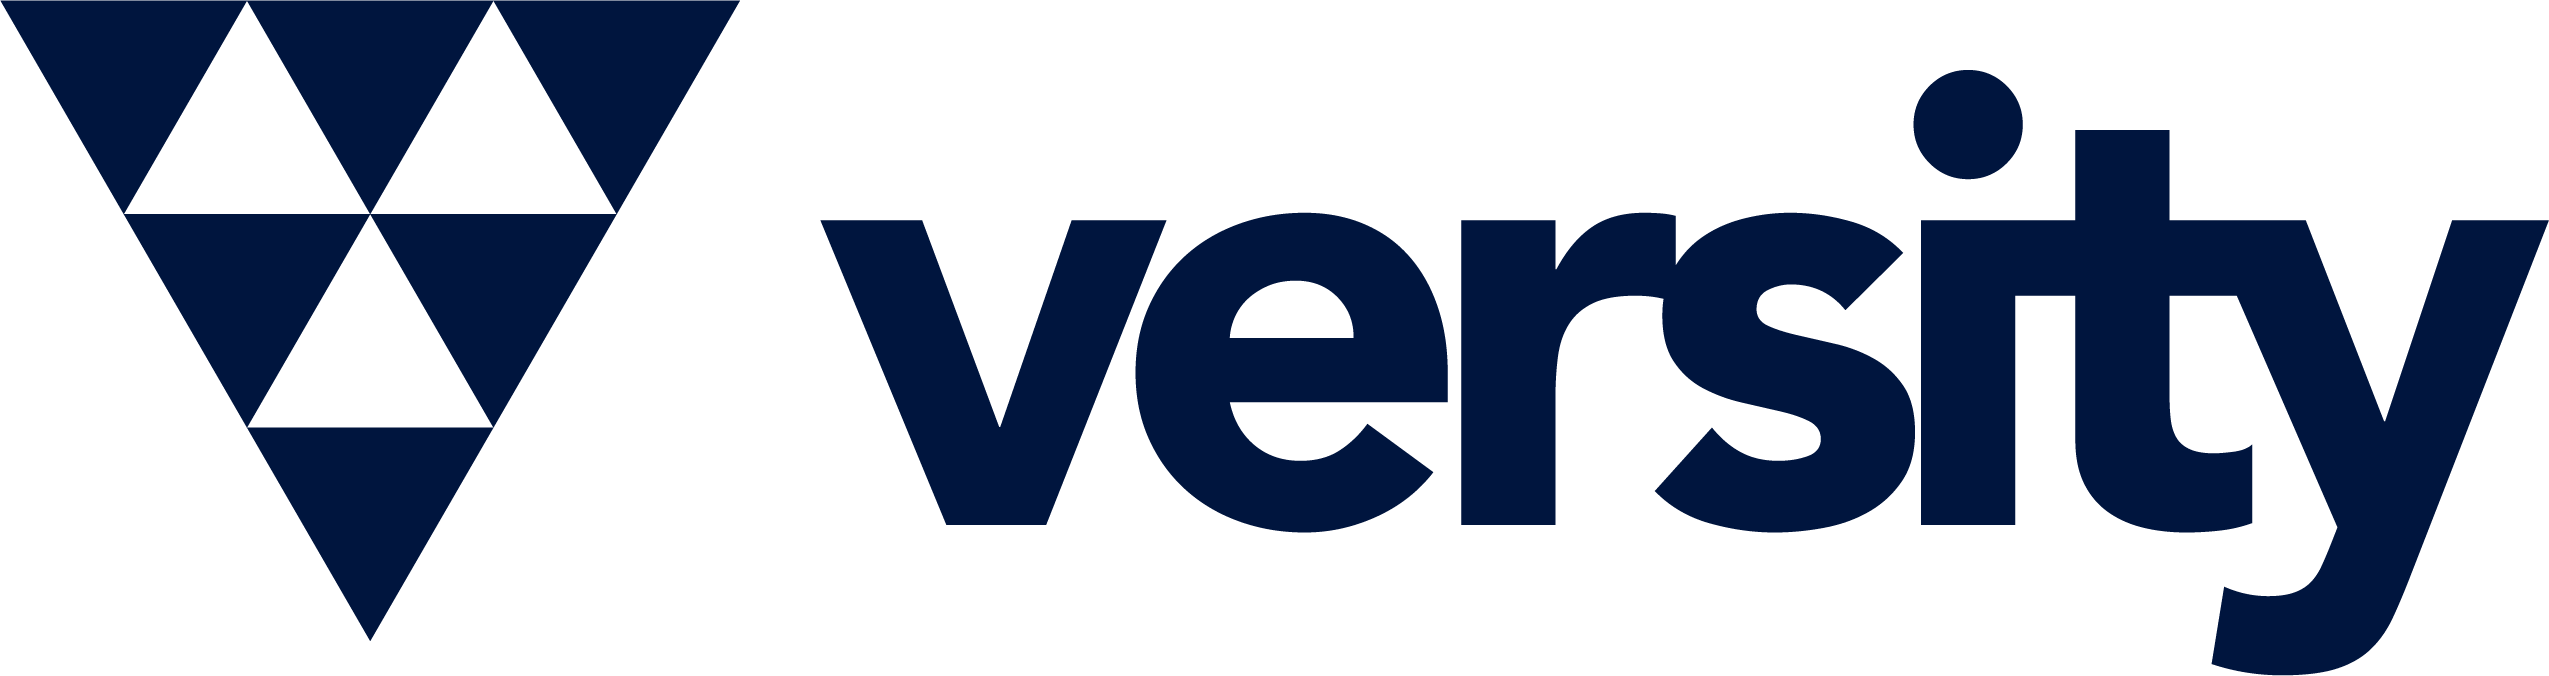 Versity-logo-primary-blue-1